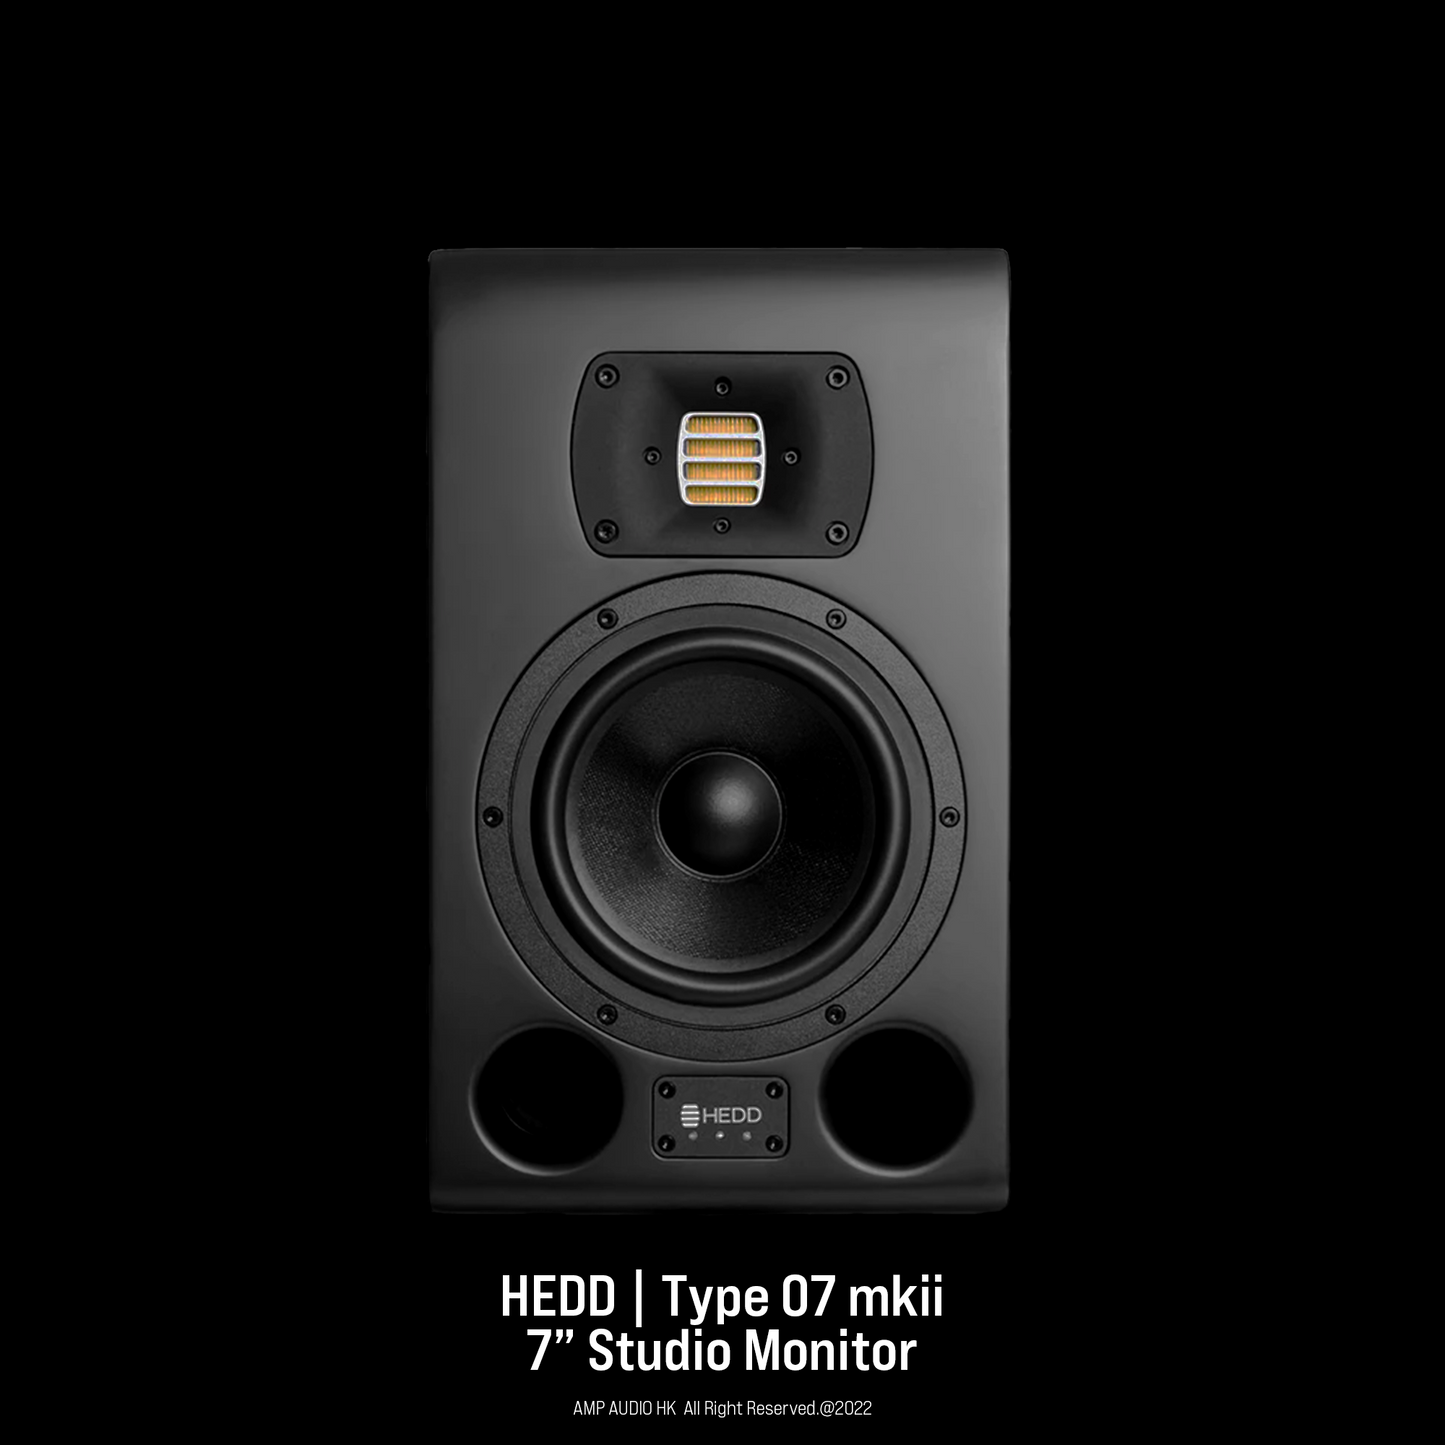 HEDD Audio | Type 07 mkii